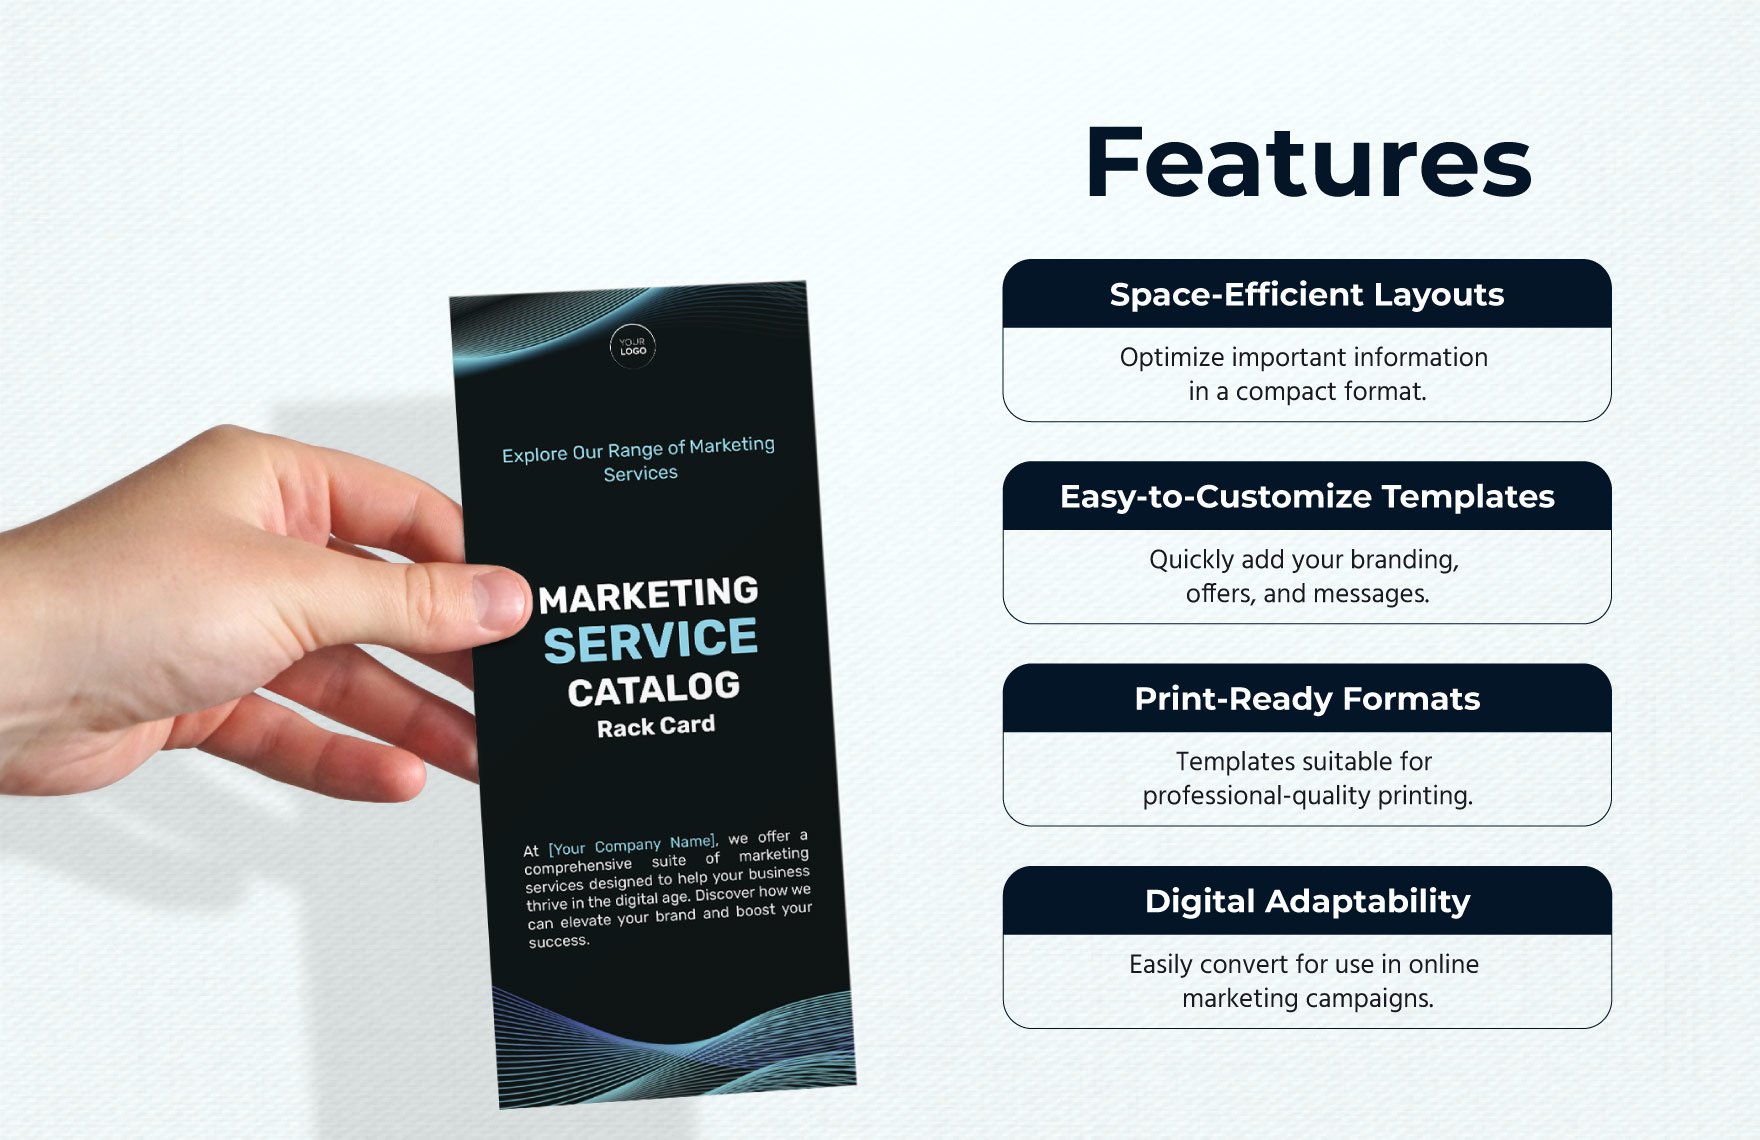 Marketing Service Catalog Rack Card Template